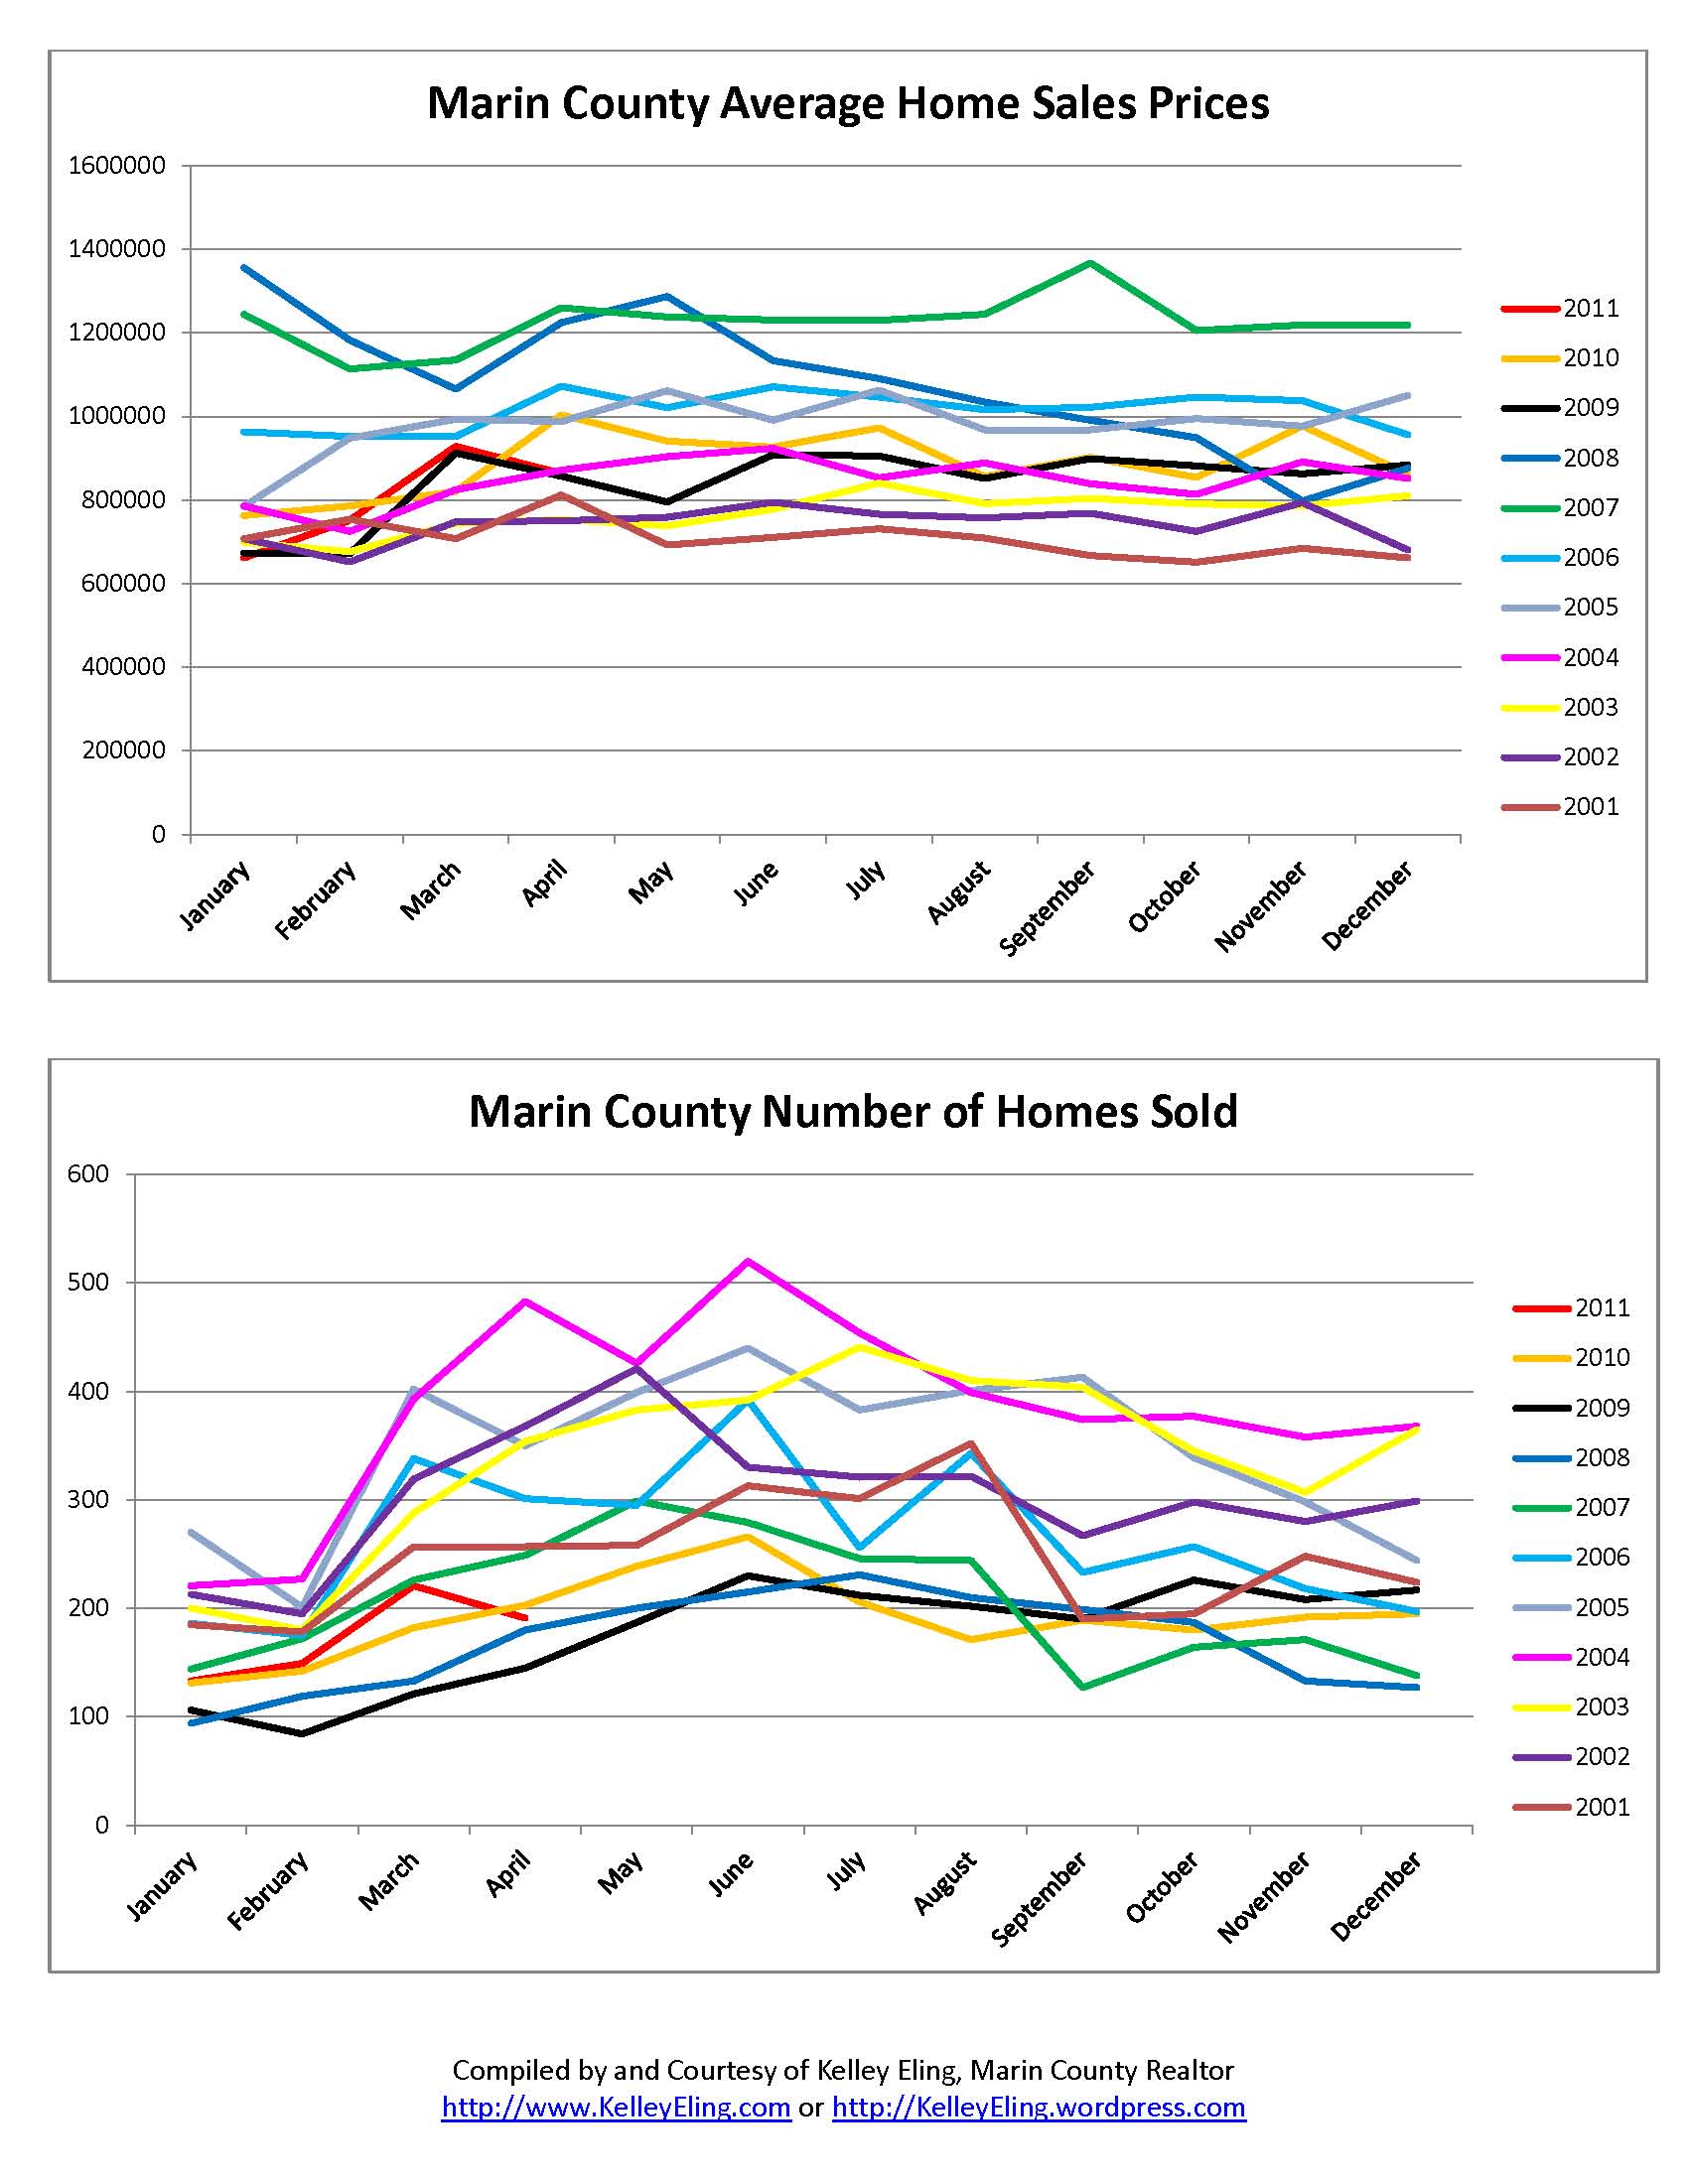 Marin County Home Sales Charts by Kelley Eling, Marin County Realtor